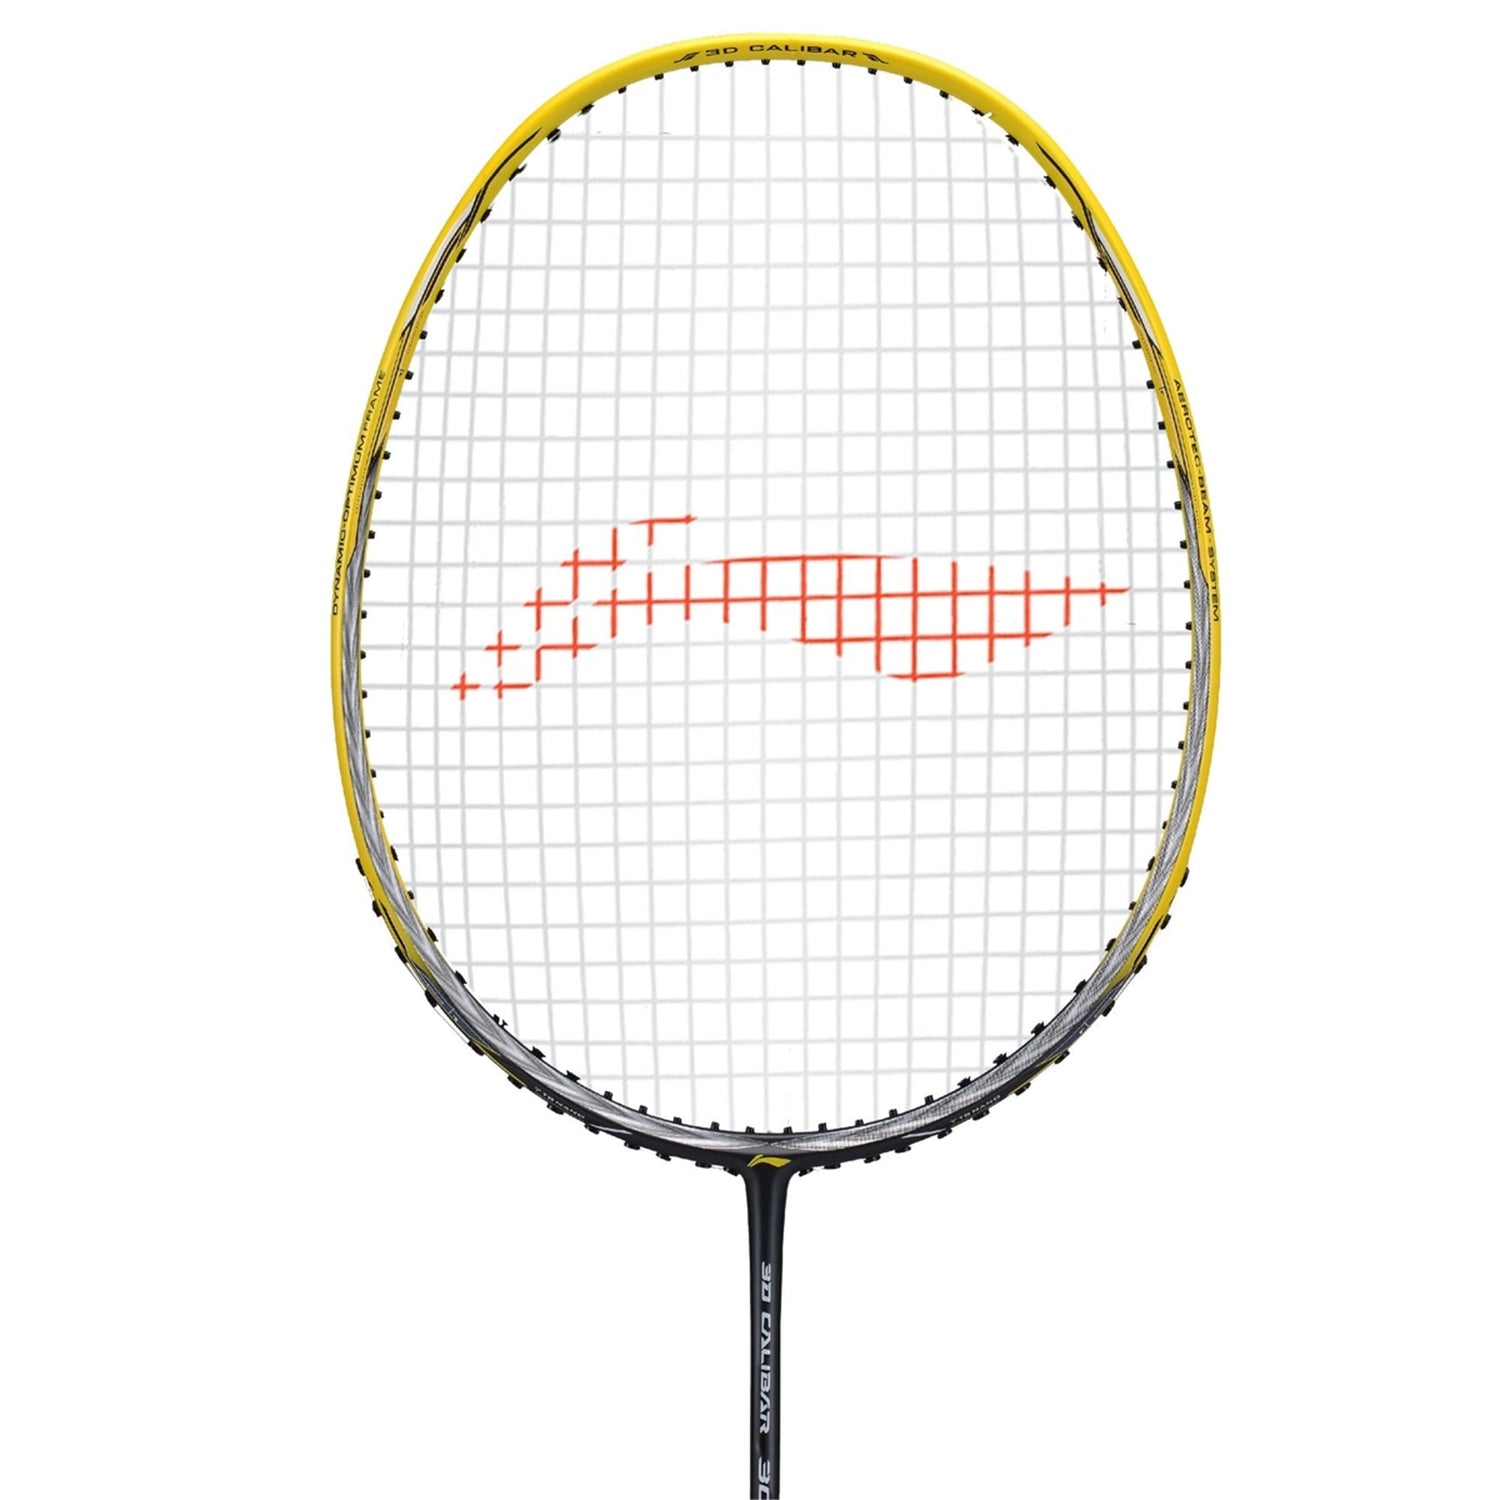 Li-Ning 3D Calibar 300 Unstrung Badminton Racquet, Yellow/Grey - Best Price online Prokicksports.com